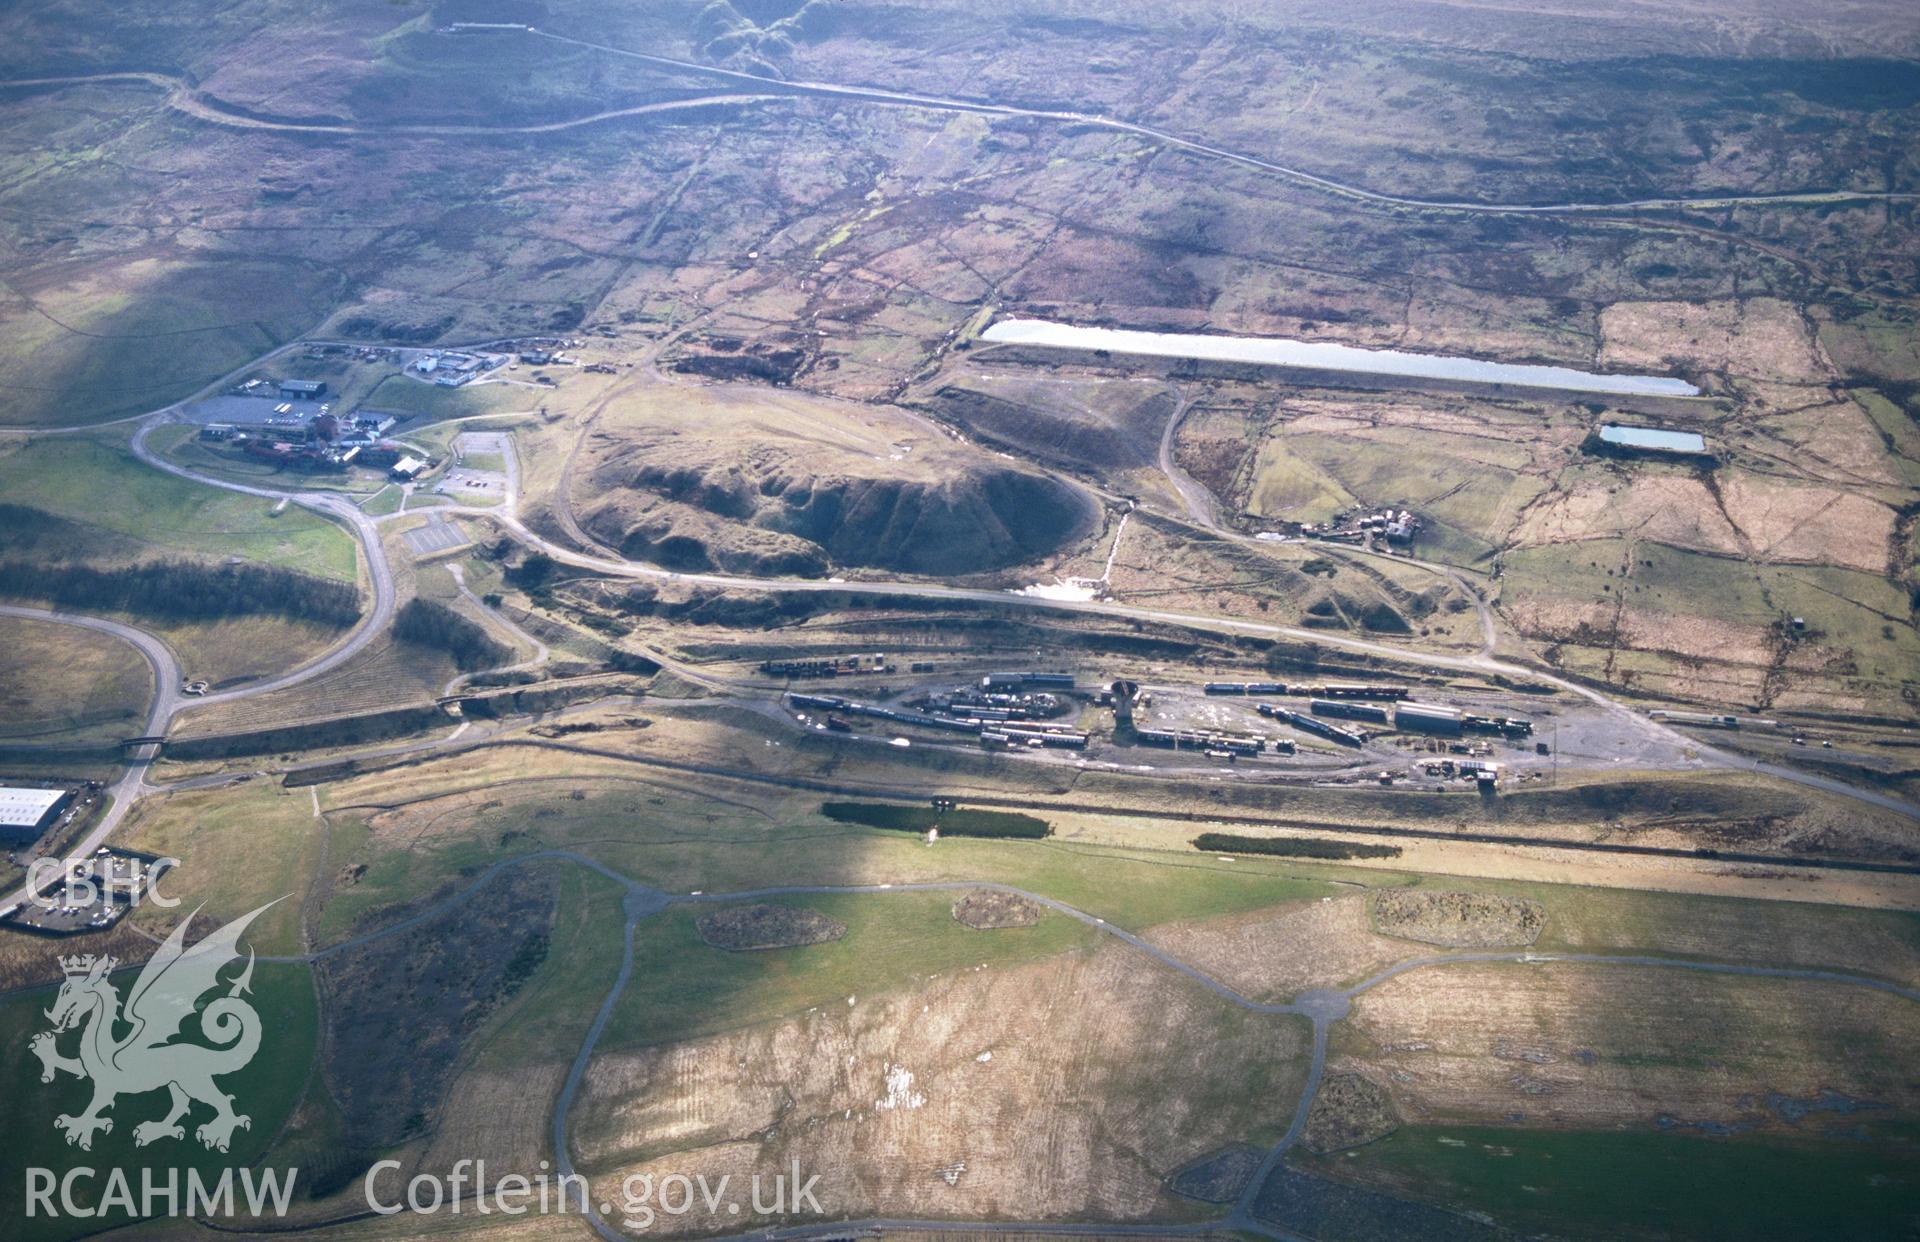 Slide of RCAHMW colour oblique aerial photograph of Big Pit Coal Mine, Blaenavon, taken by T.G. Driver, 15/3/1999.